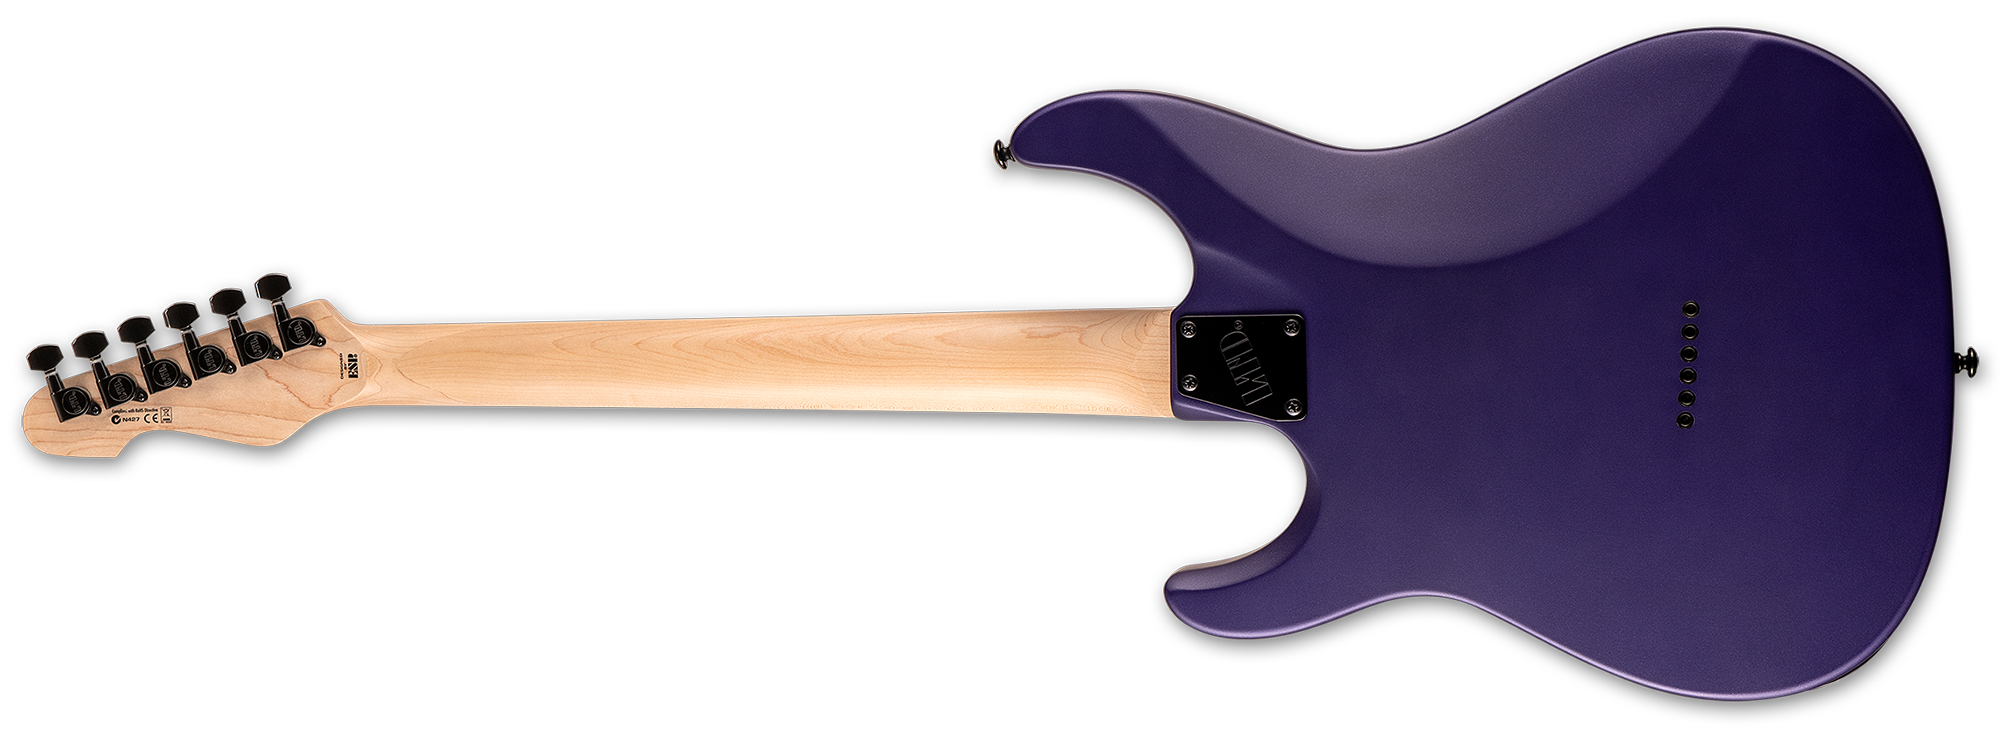 Ltd Sn-200ht Hh Ht Mn - Dark Metallic Purple Satin - Guitare Électrique Forme Str - Variation 2